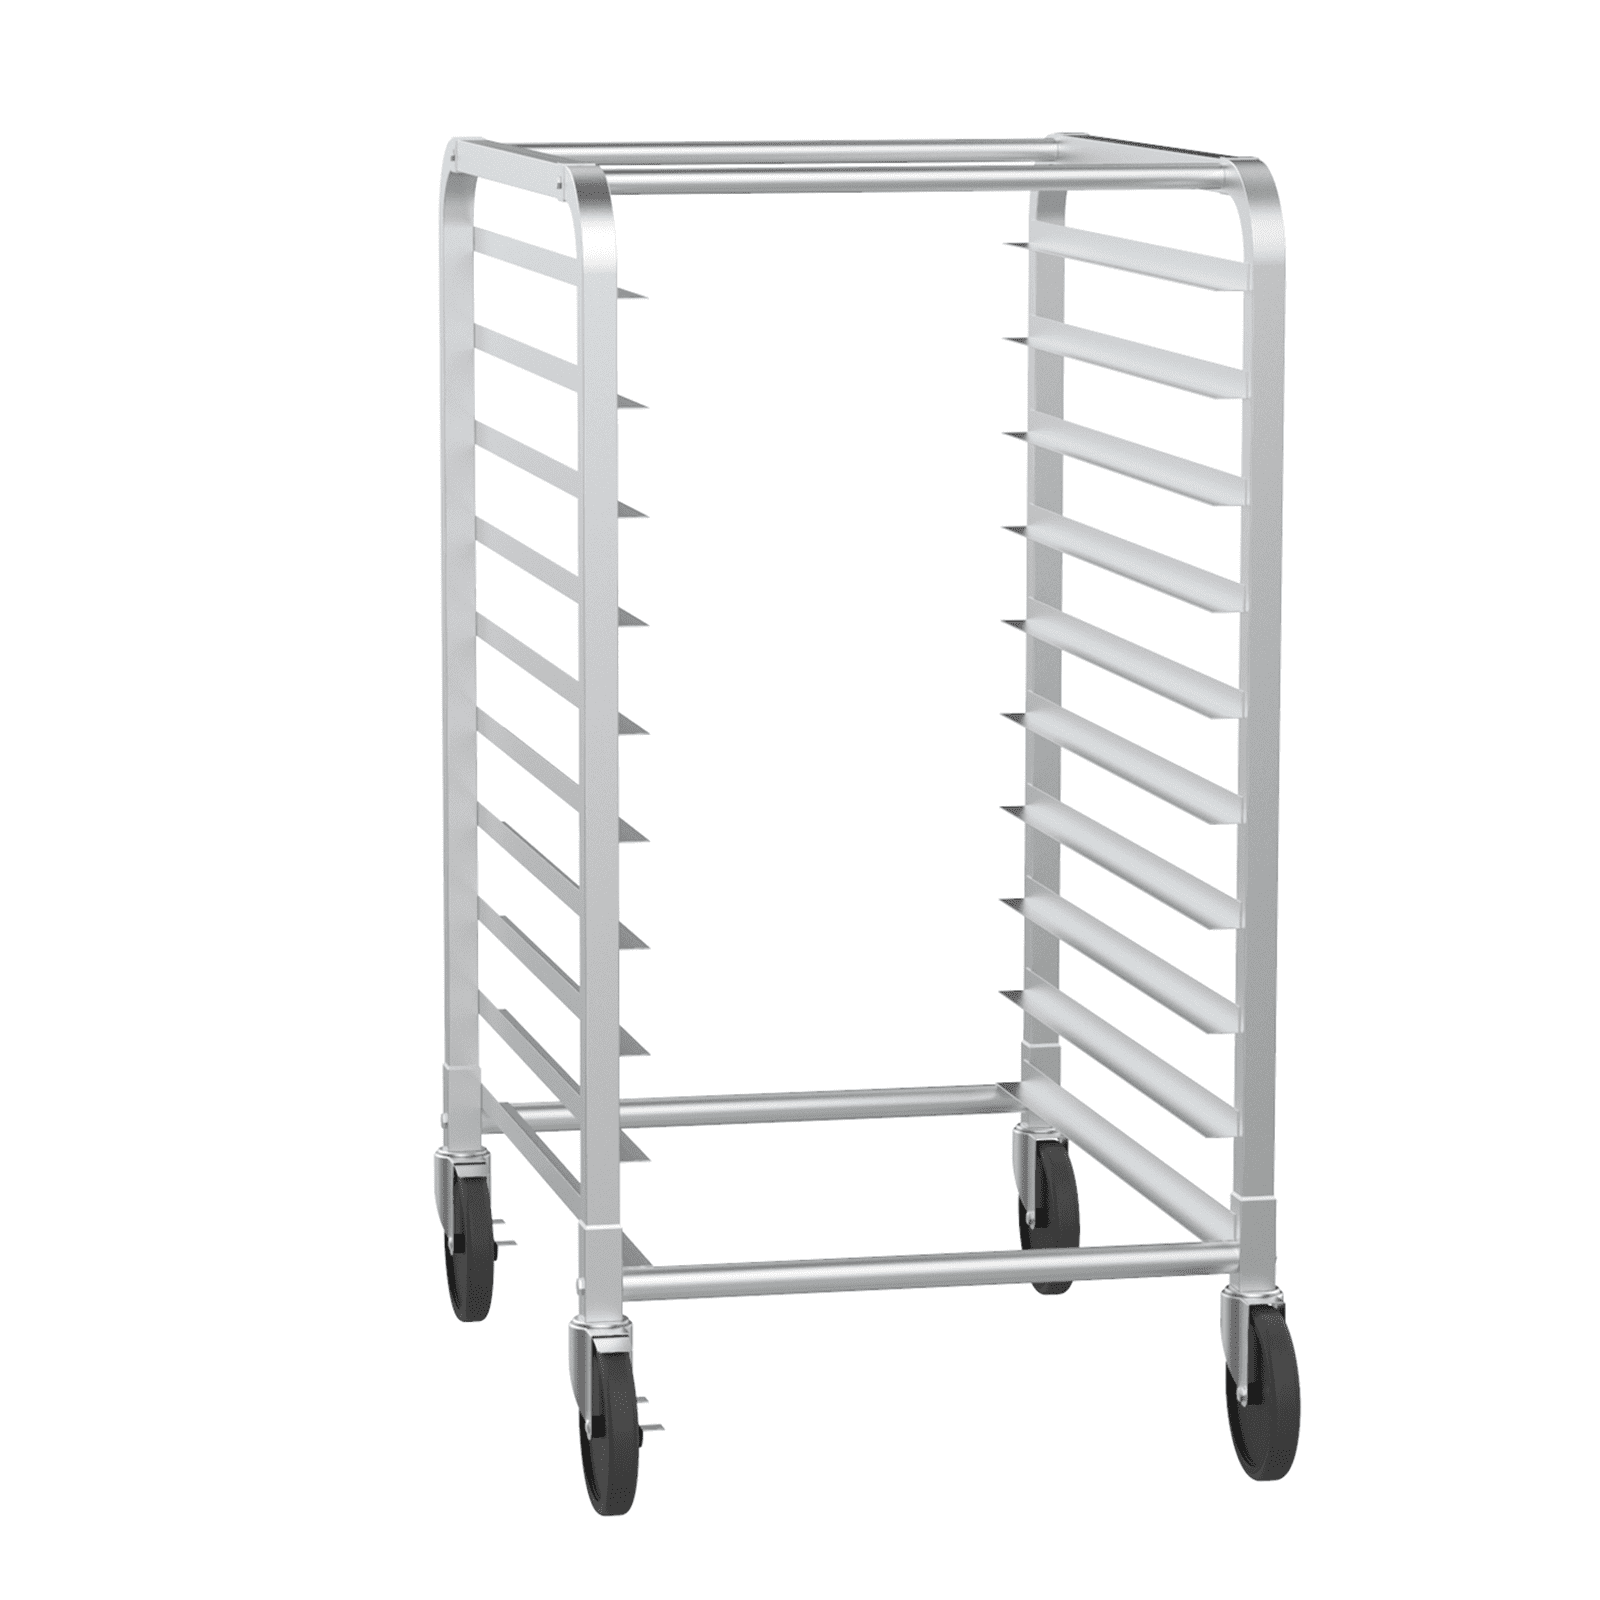  Profeeshaw Bun Pan Bakery Rack 10 Tier with Wheels, Aluminum  Racking Trolley Storage for Half or Full Sheets : Industrial & Scientific